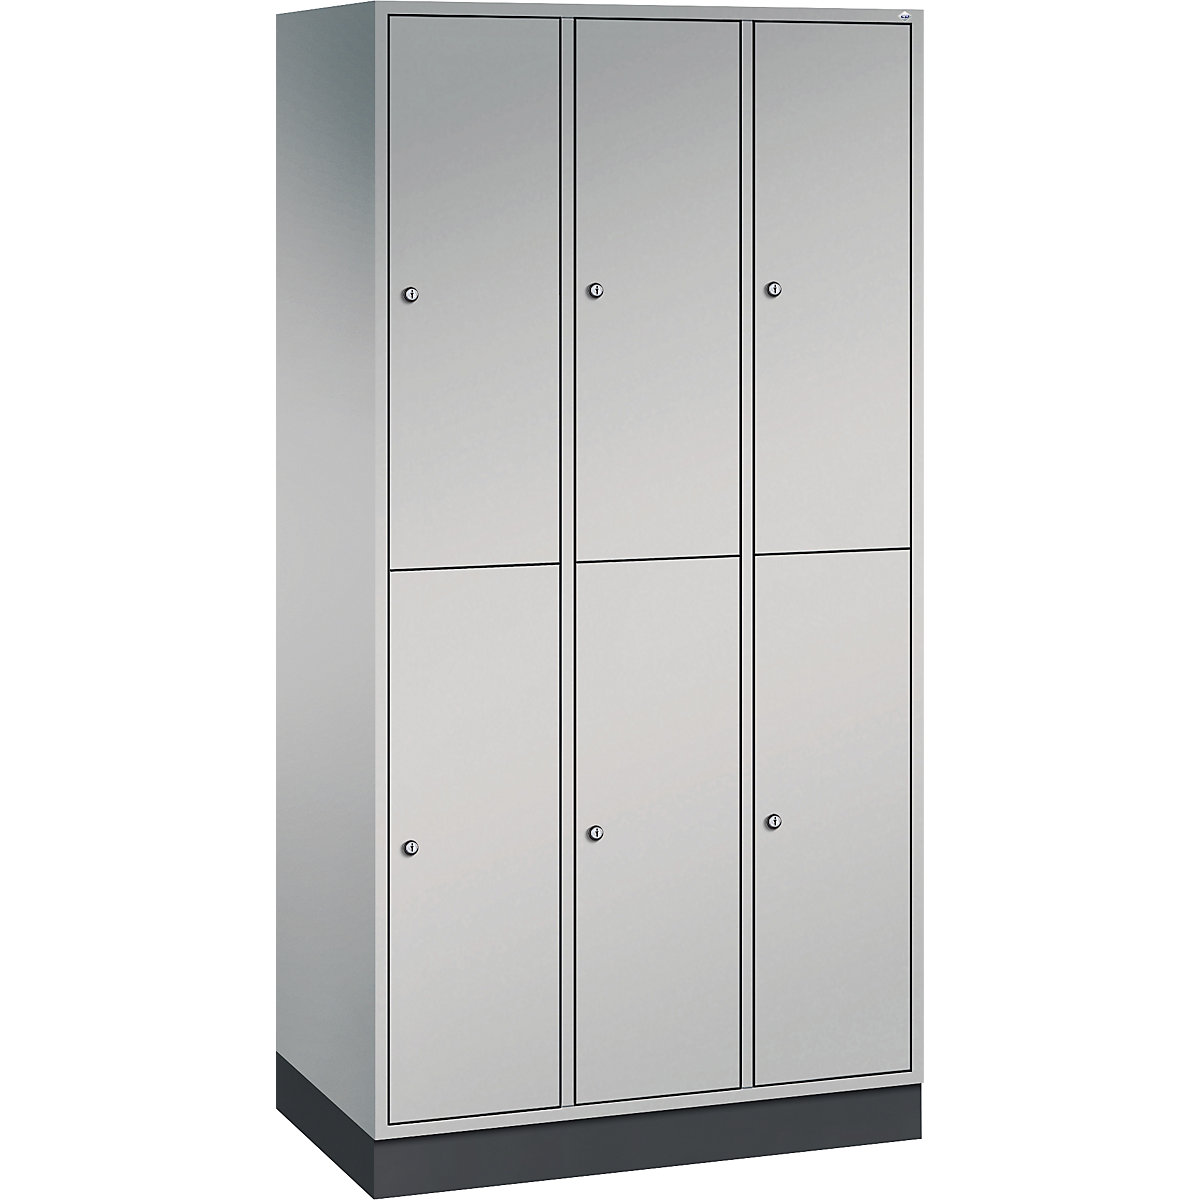 INTRO double tier steel cloakroom locker – C+P, WxD 920 x 500 mm, 6 compartments, white aluminium body, white aluminium doors